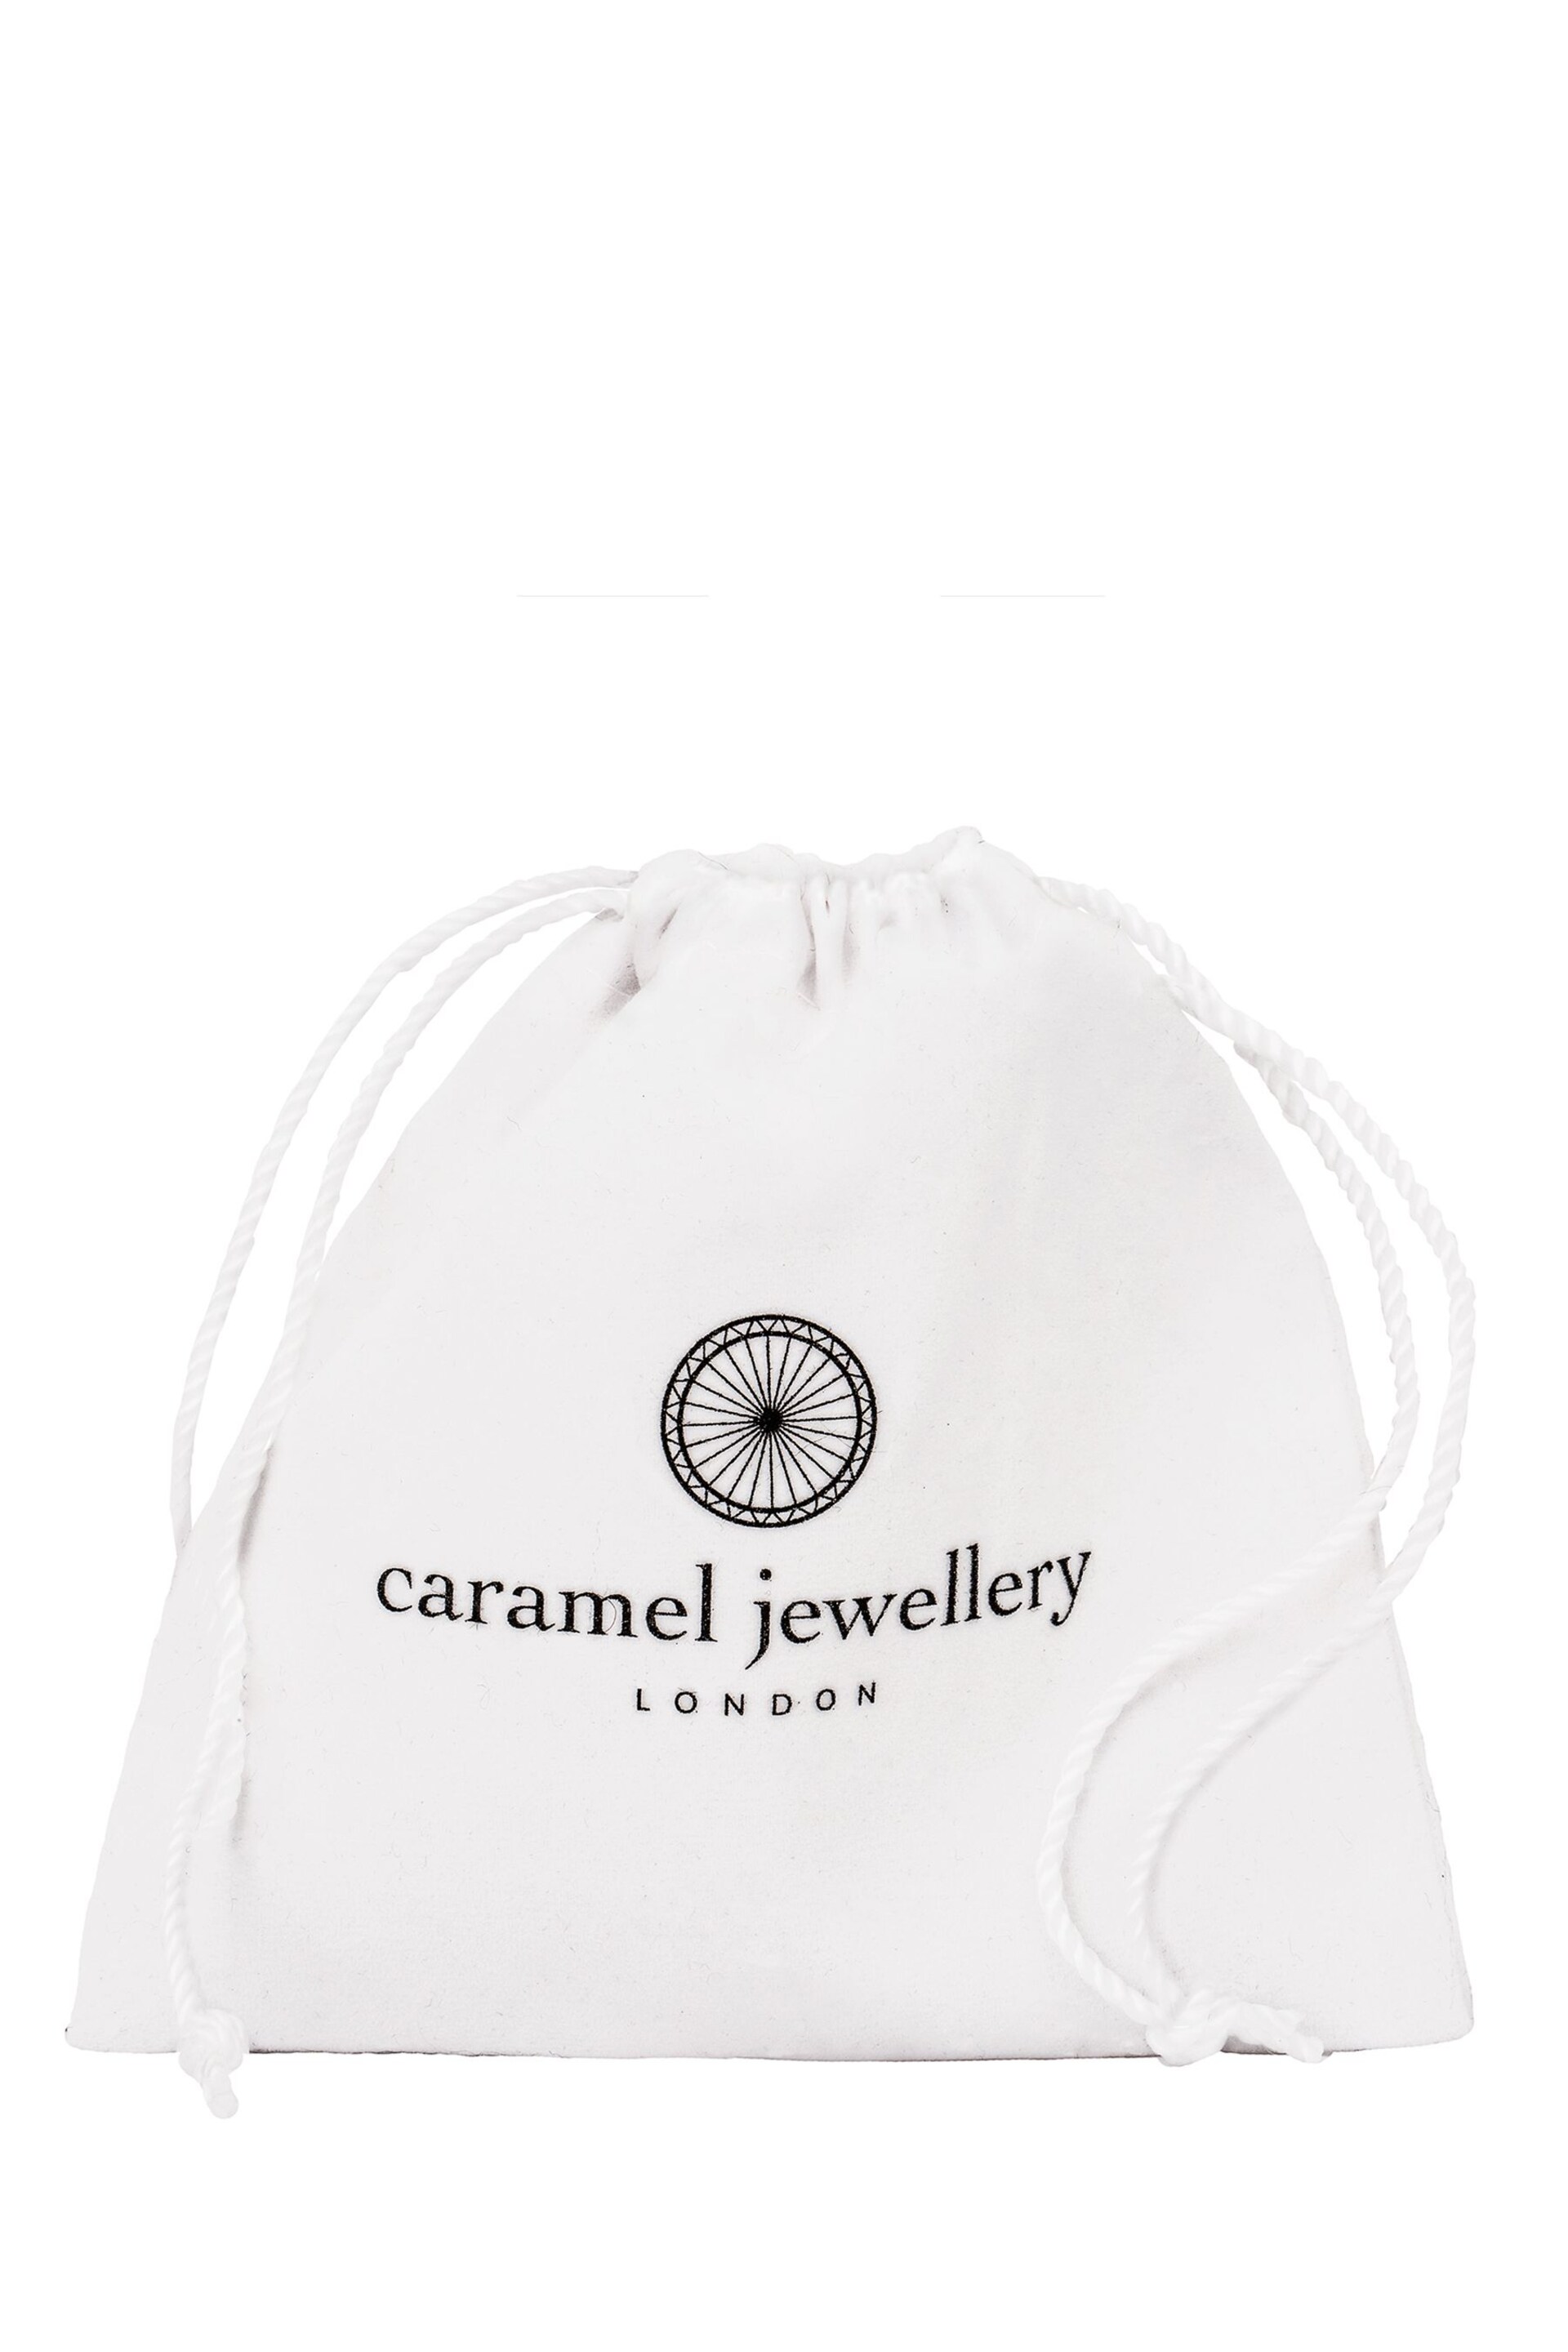 Caramel Jewellery London Gold Tone Superstar Necklace - Image 7 of 7